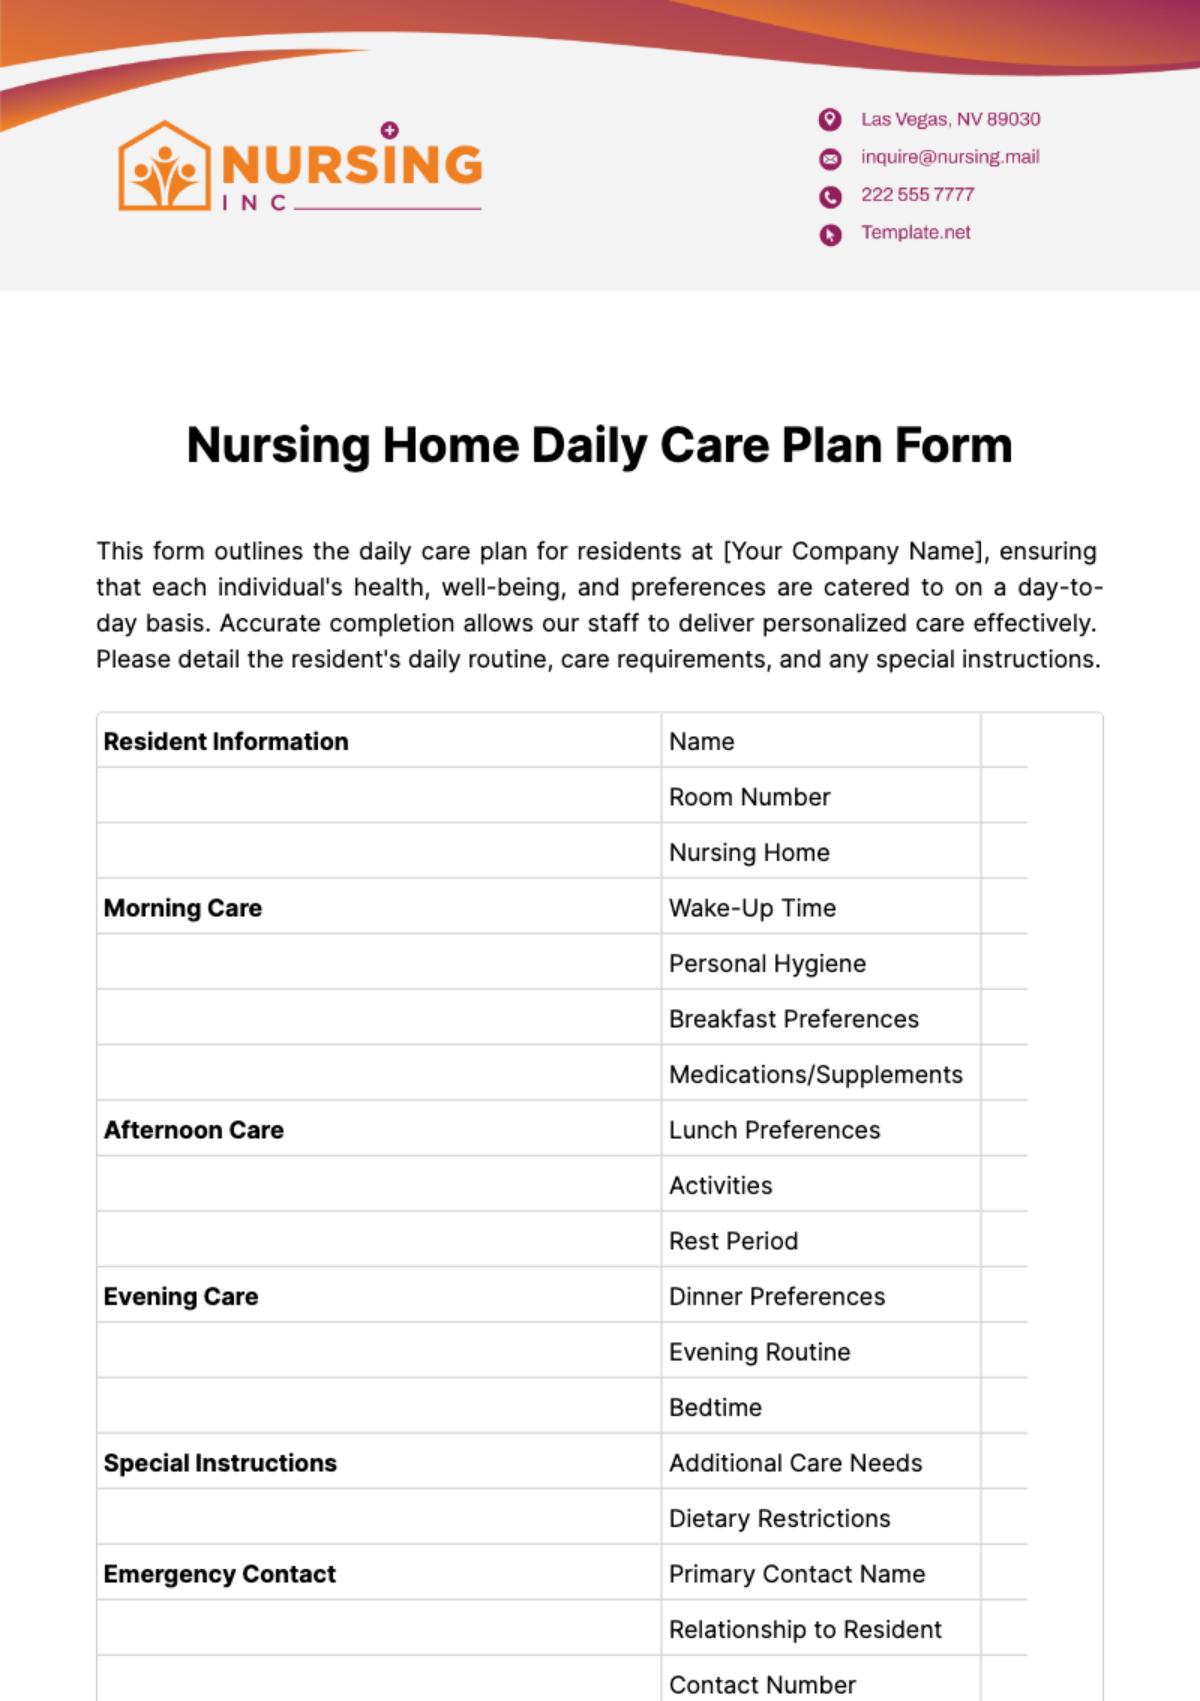 Nursing Home Daily Care Plan Form Template